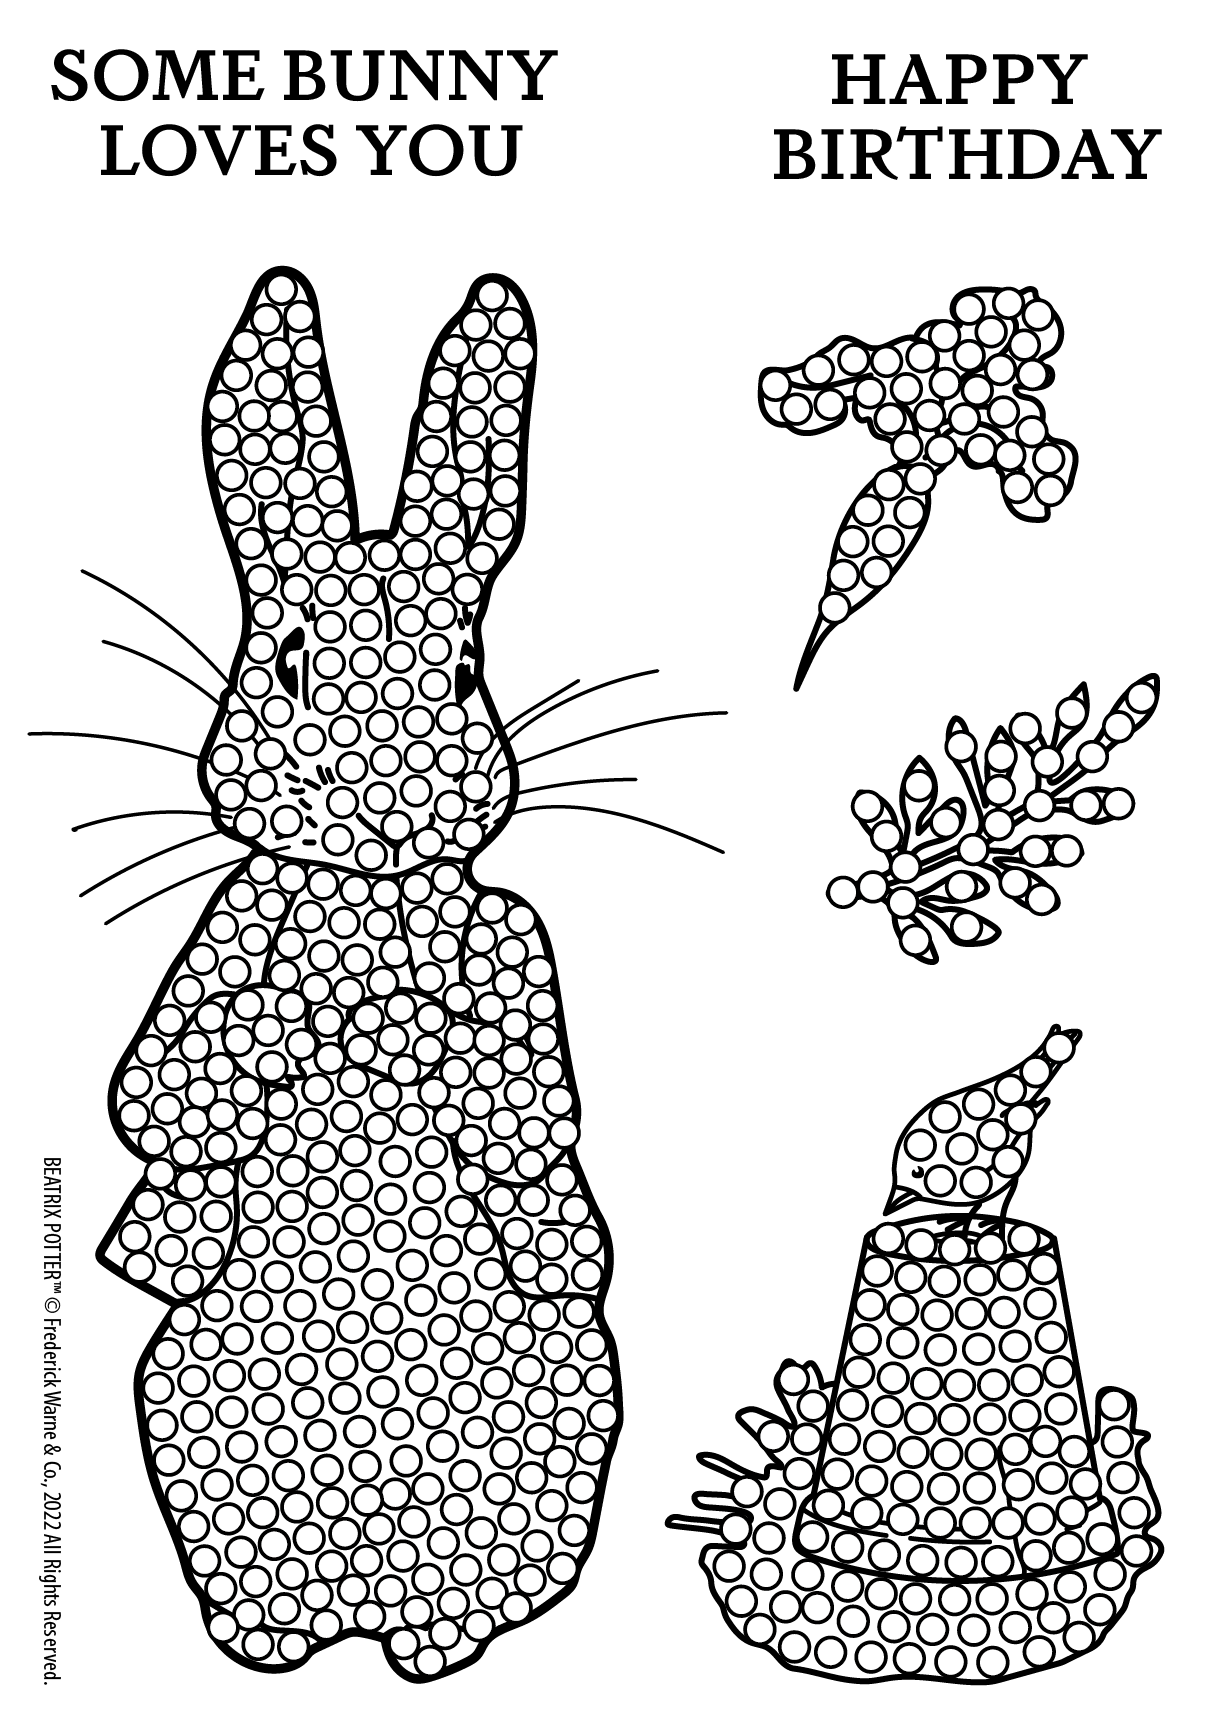 CCST-PR03: Peter Rabbit Crystal Art A6 Stamp Set - Peter Rabbit